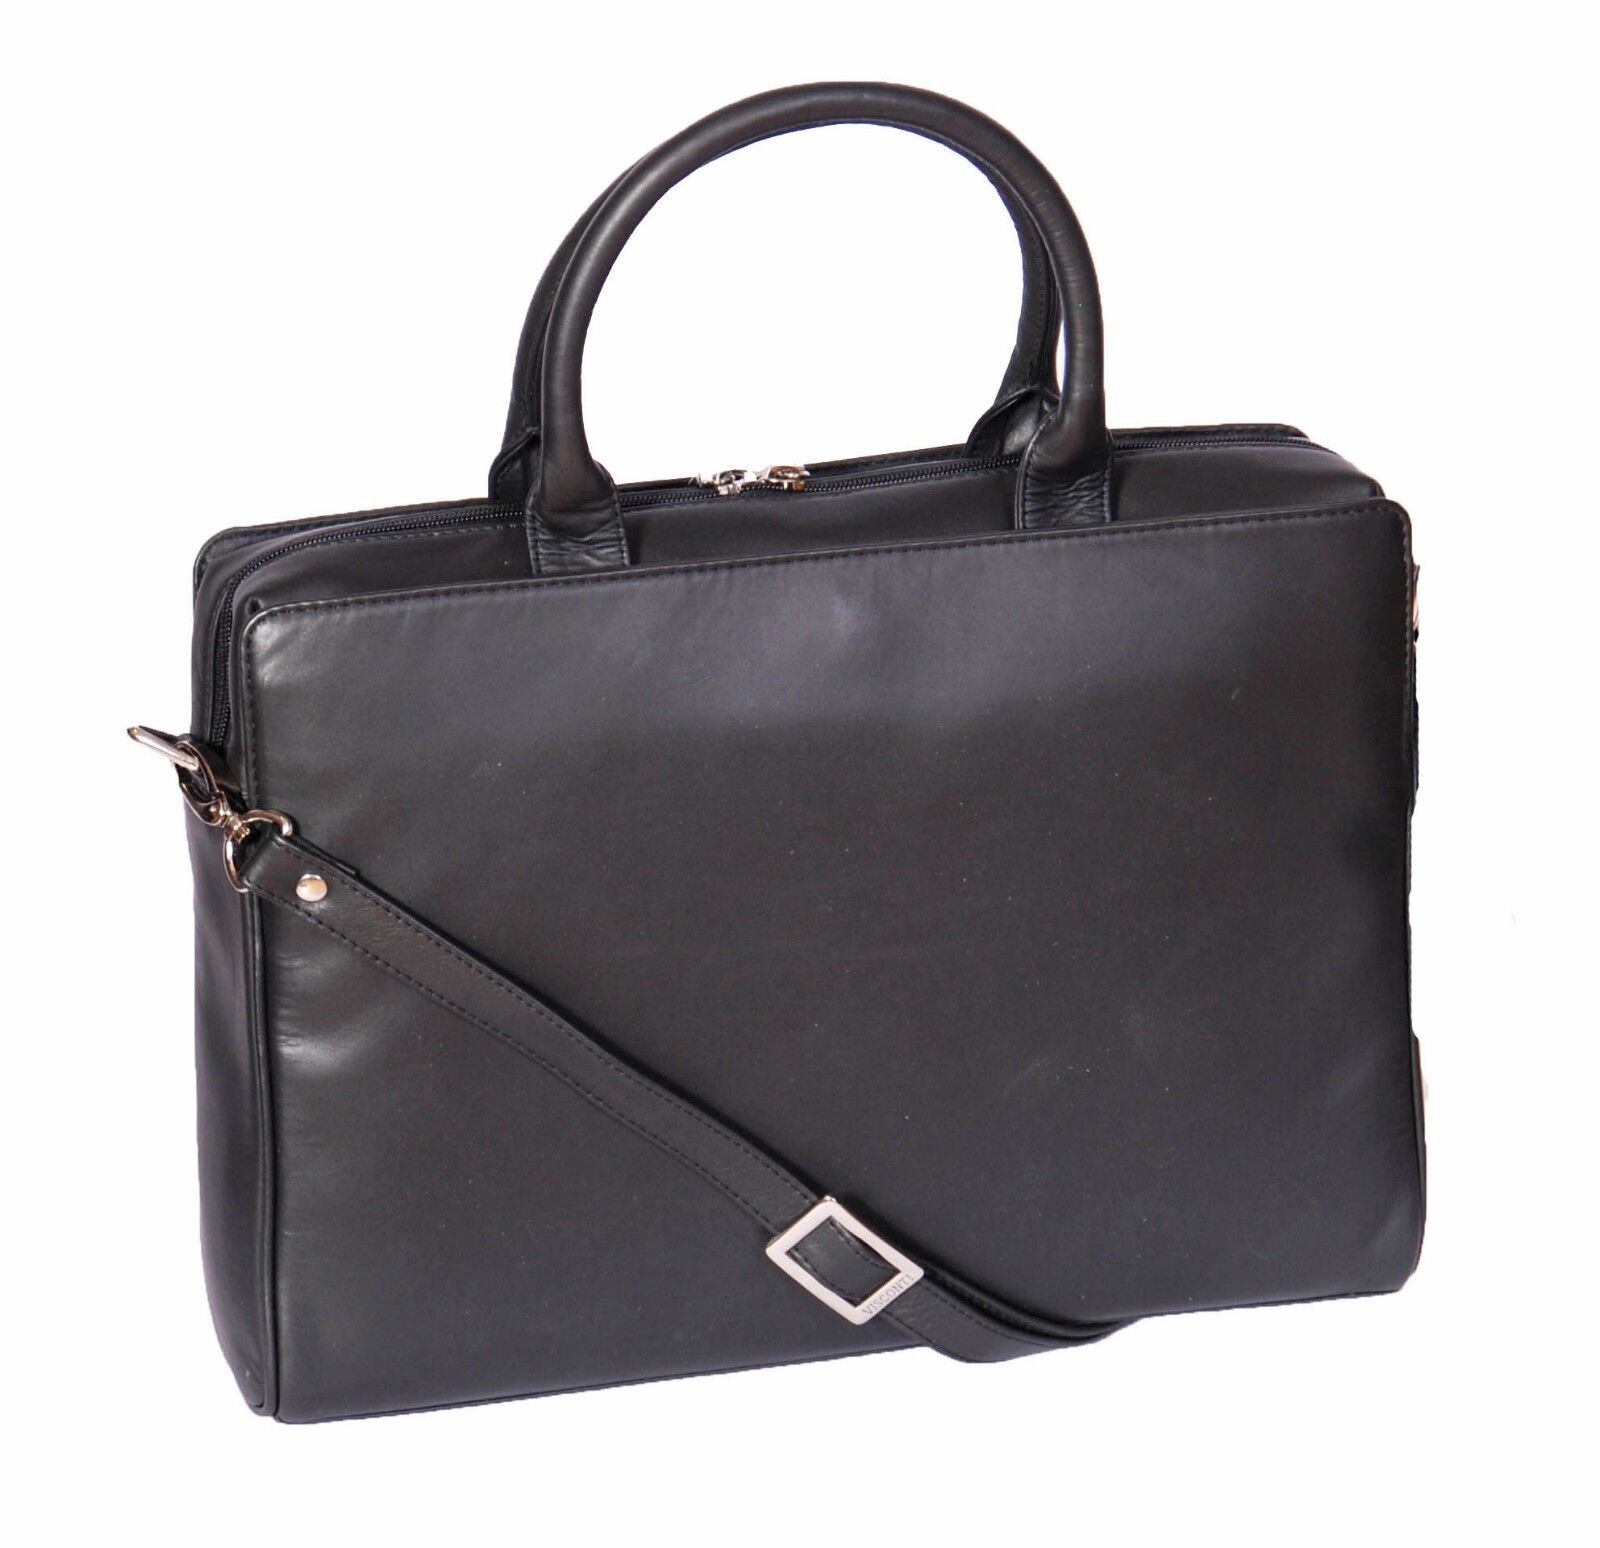 Womens Black Leather Briefcase Business office Bag A4 Files Laptop Shoulder Bag